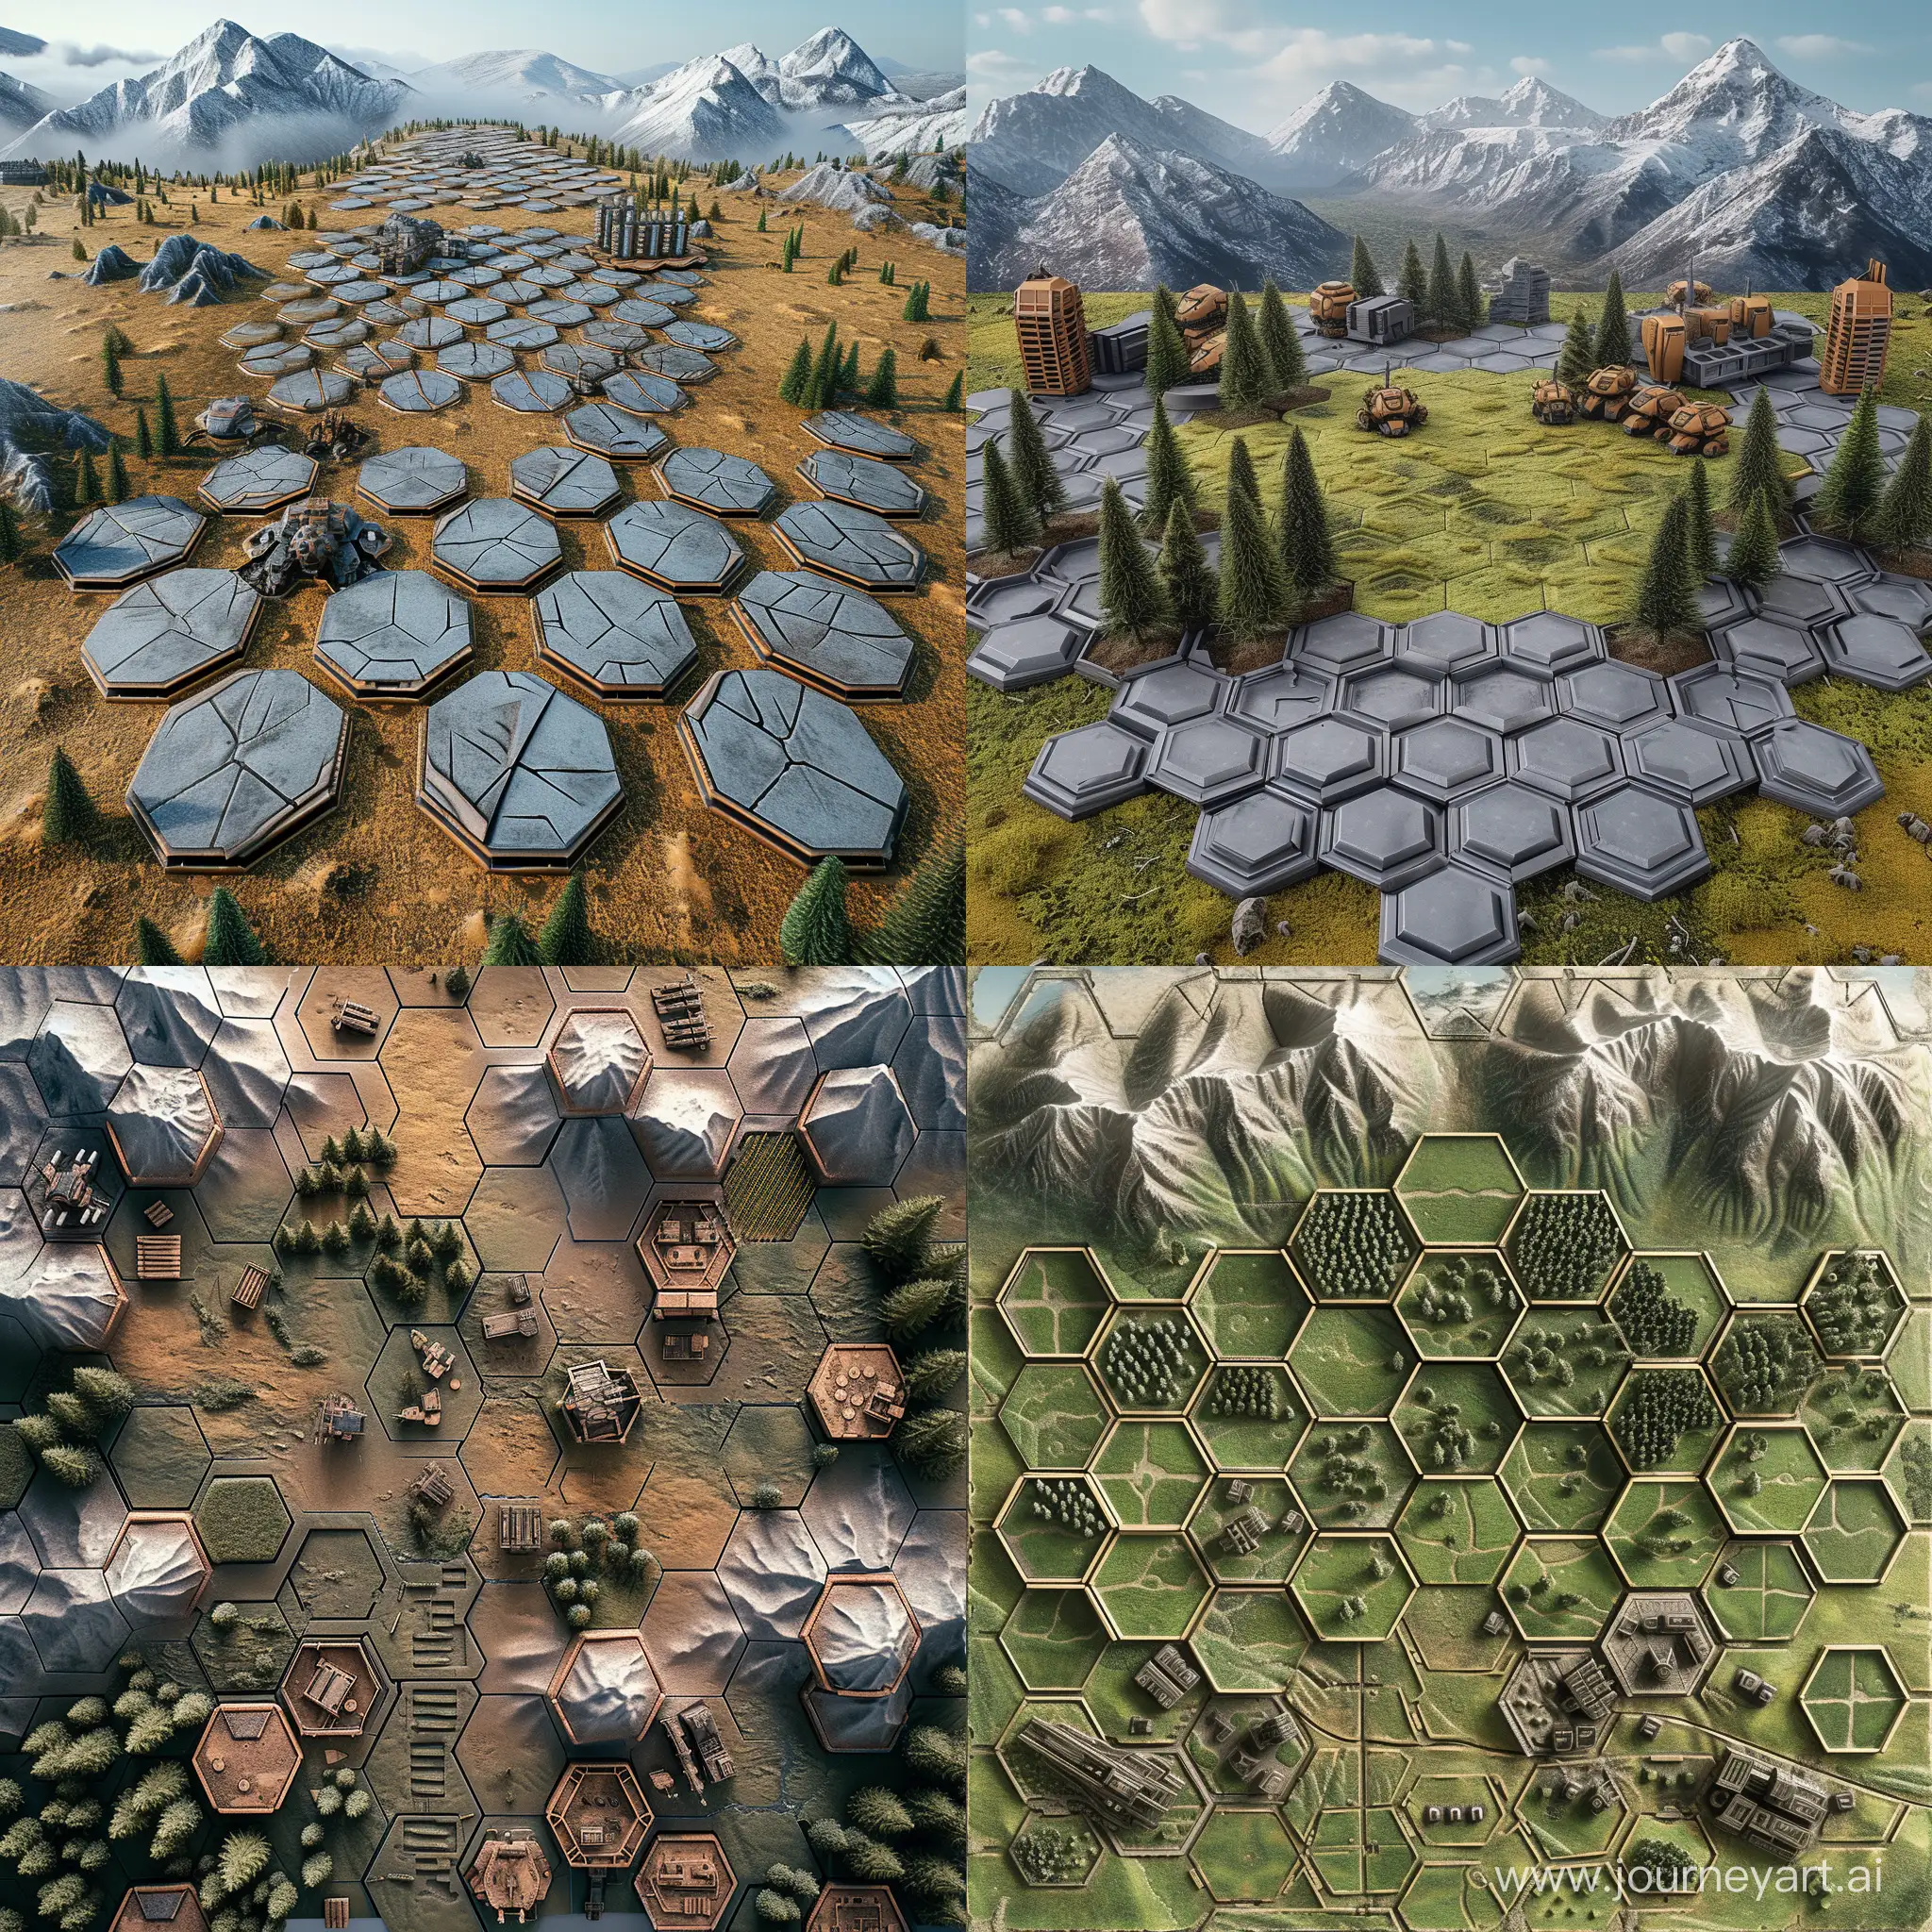 Strategic-Battletech-Tabletop-Game-Setup-with-Hexagonal-Field-and-Diverse-Terrain